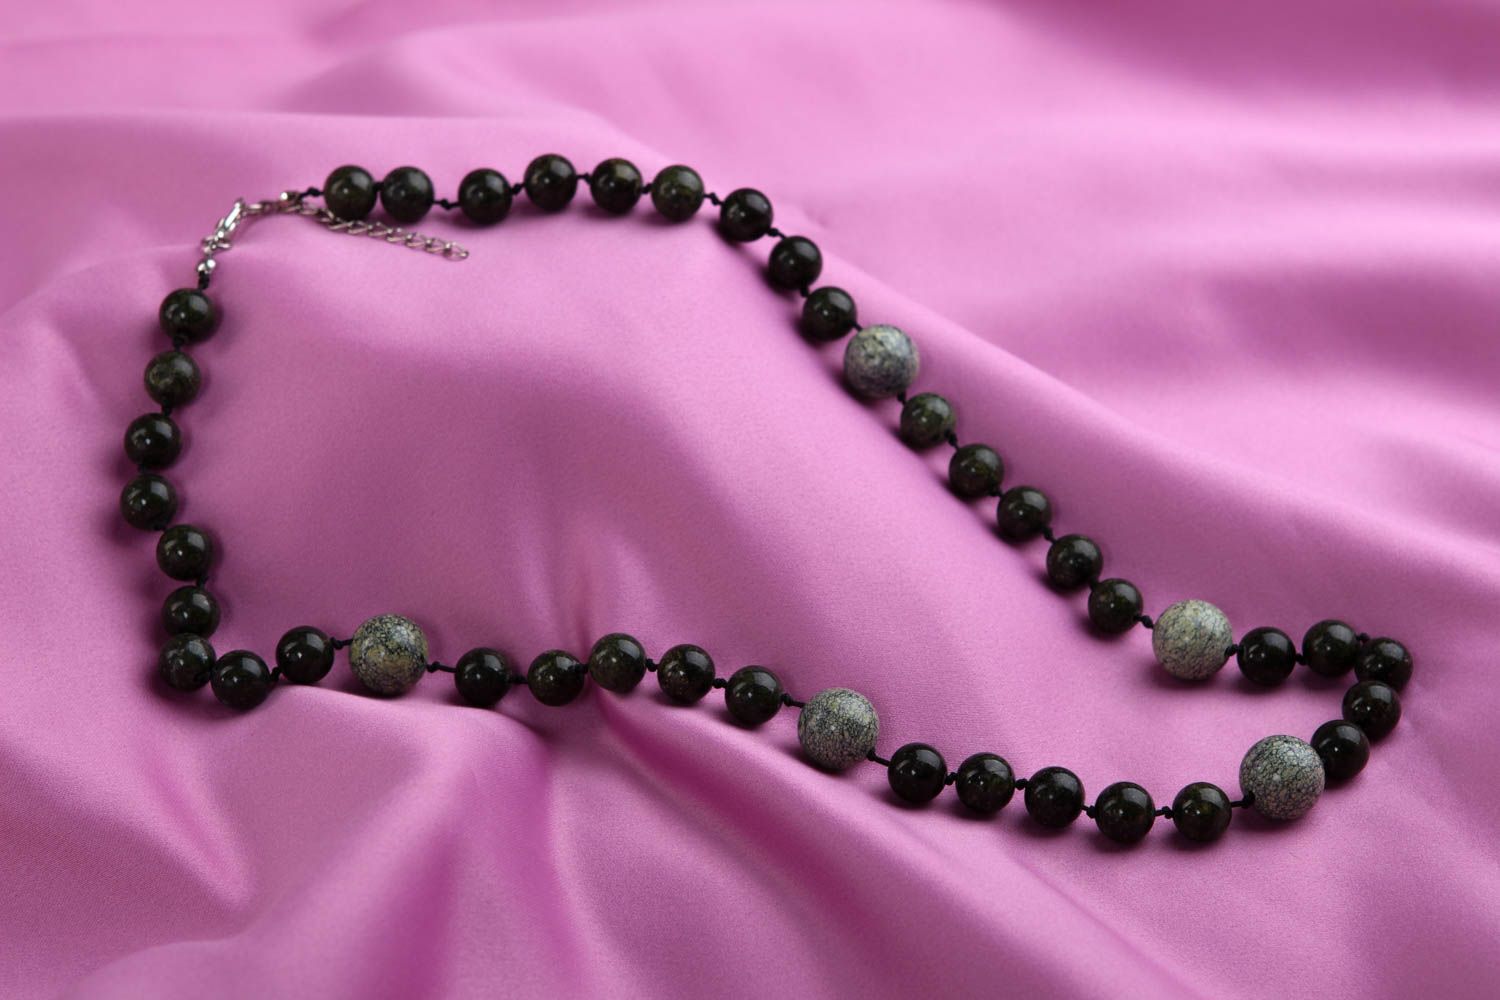 Handmade jewelry designer bead necklace neck accessory stone jewelry gift ideas photo 1